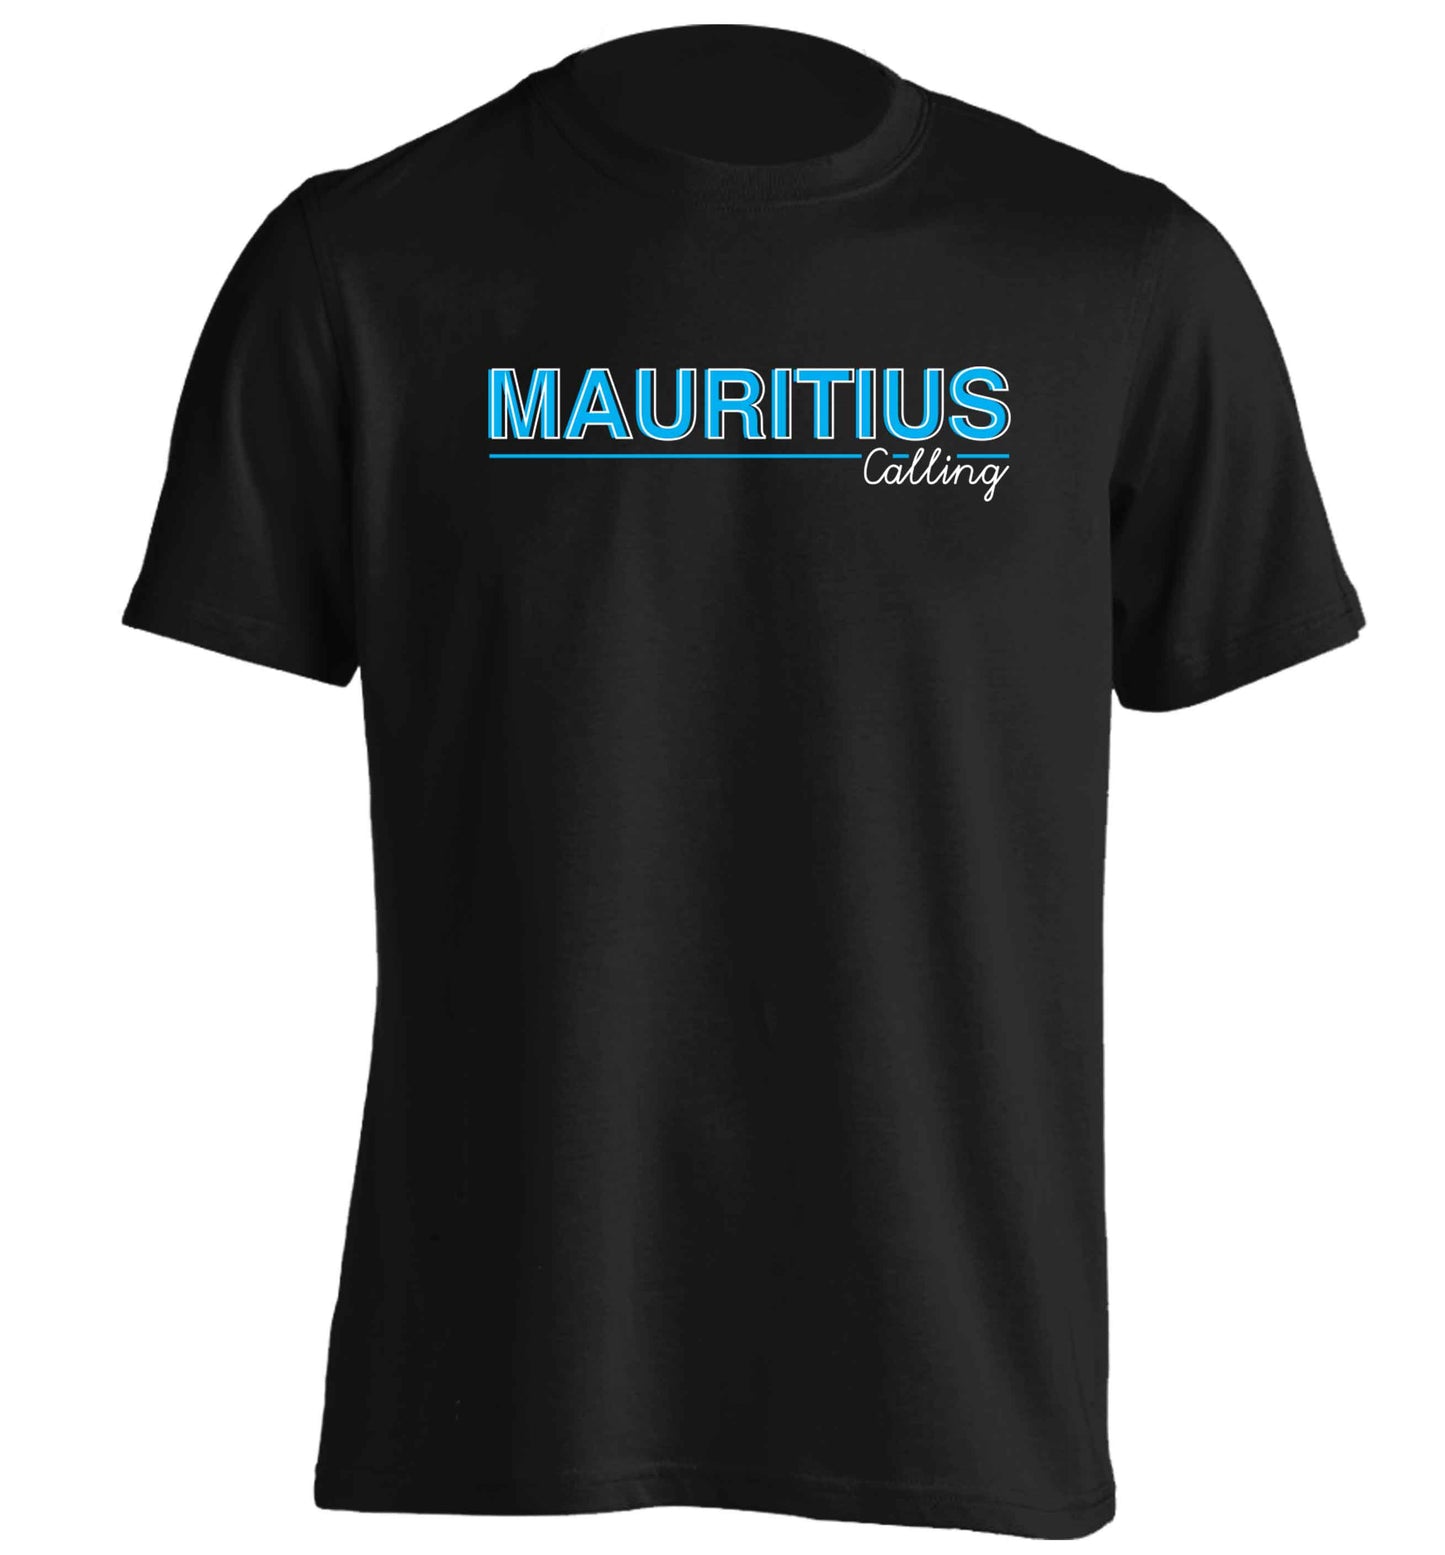 Mauritius calling adults unisex black Tshirt 2XL